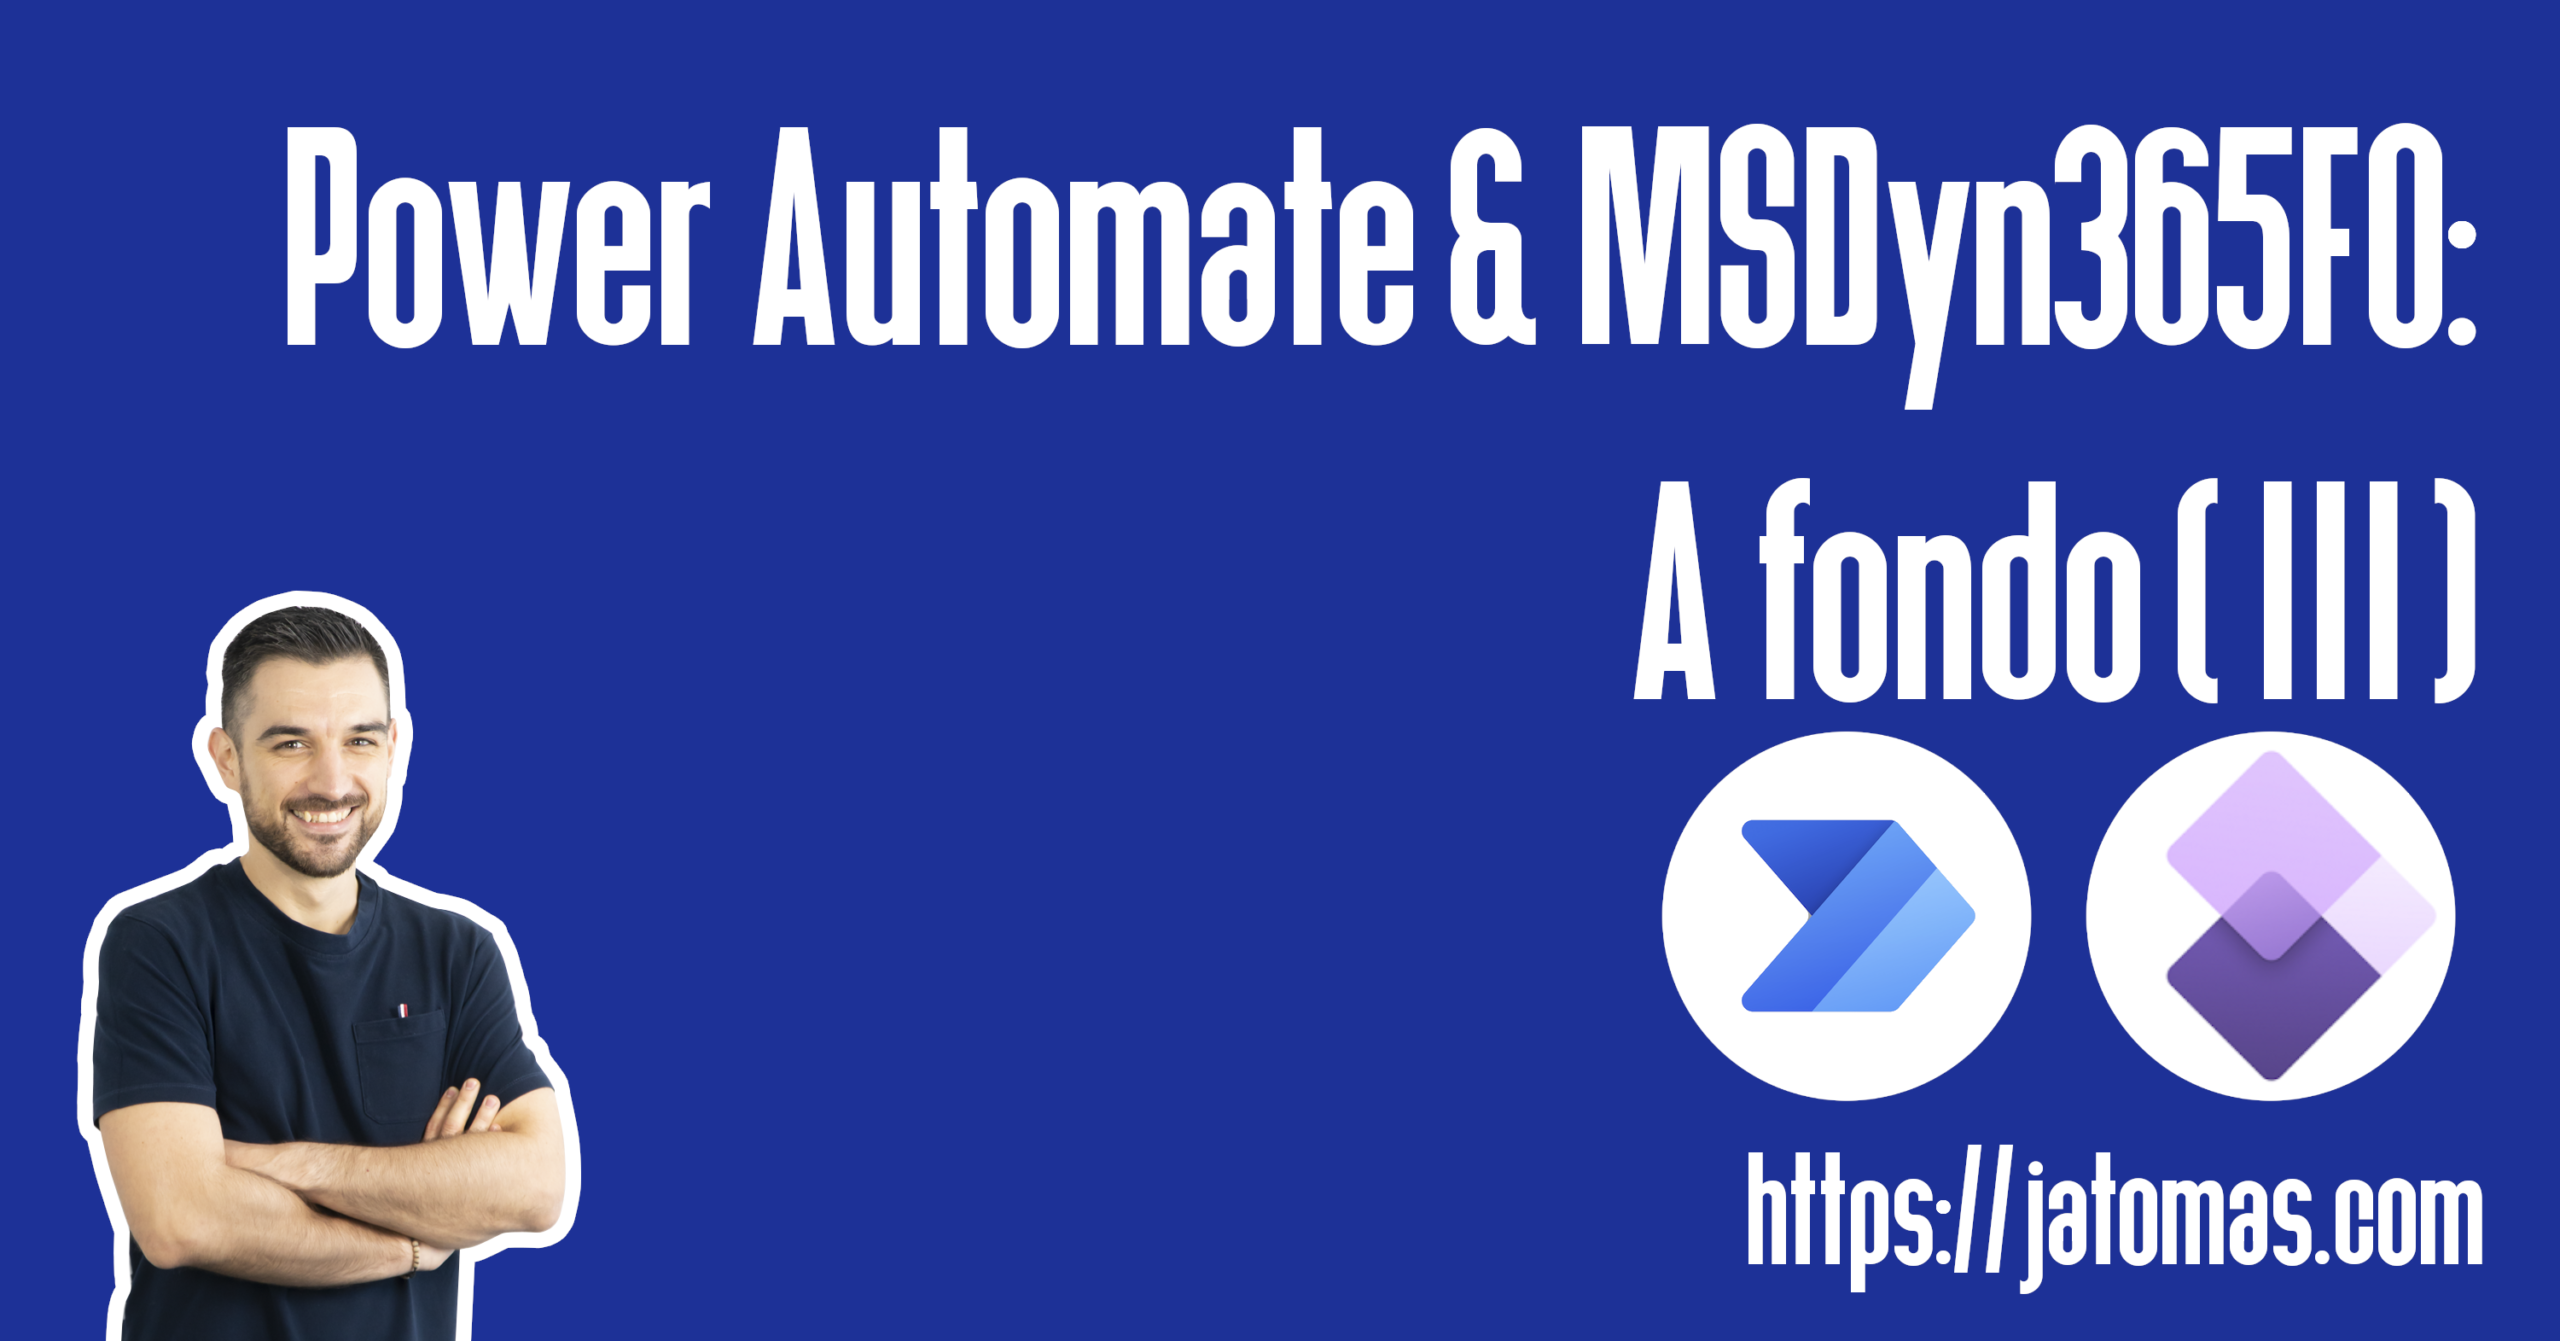 Power Automate & MSDyn365FO: A fondo (III)